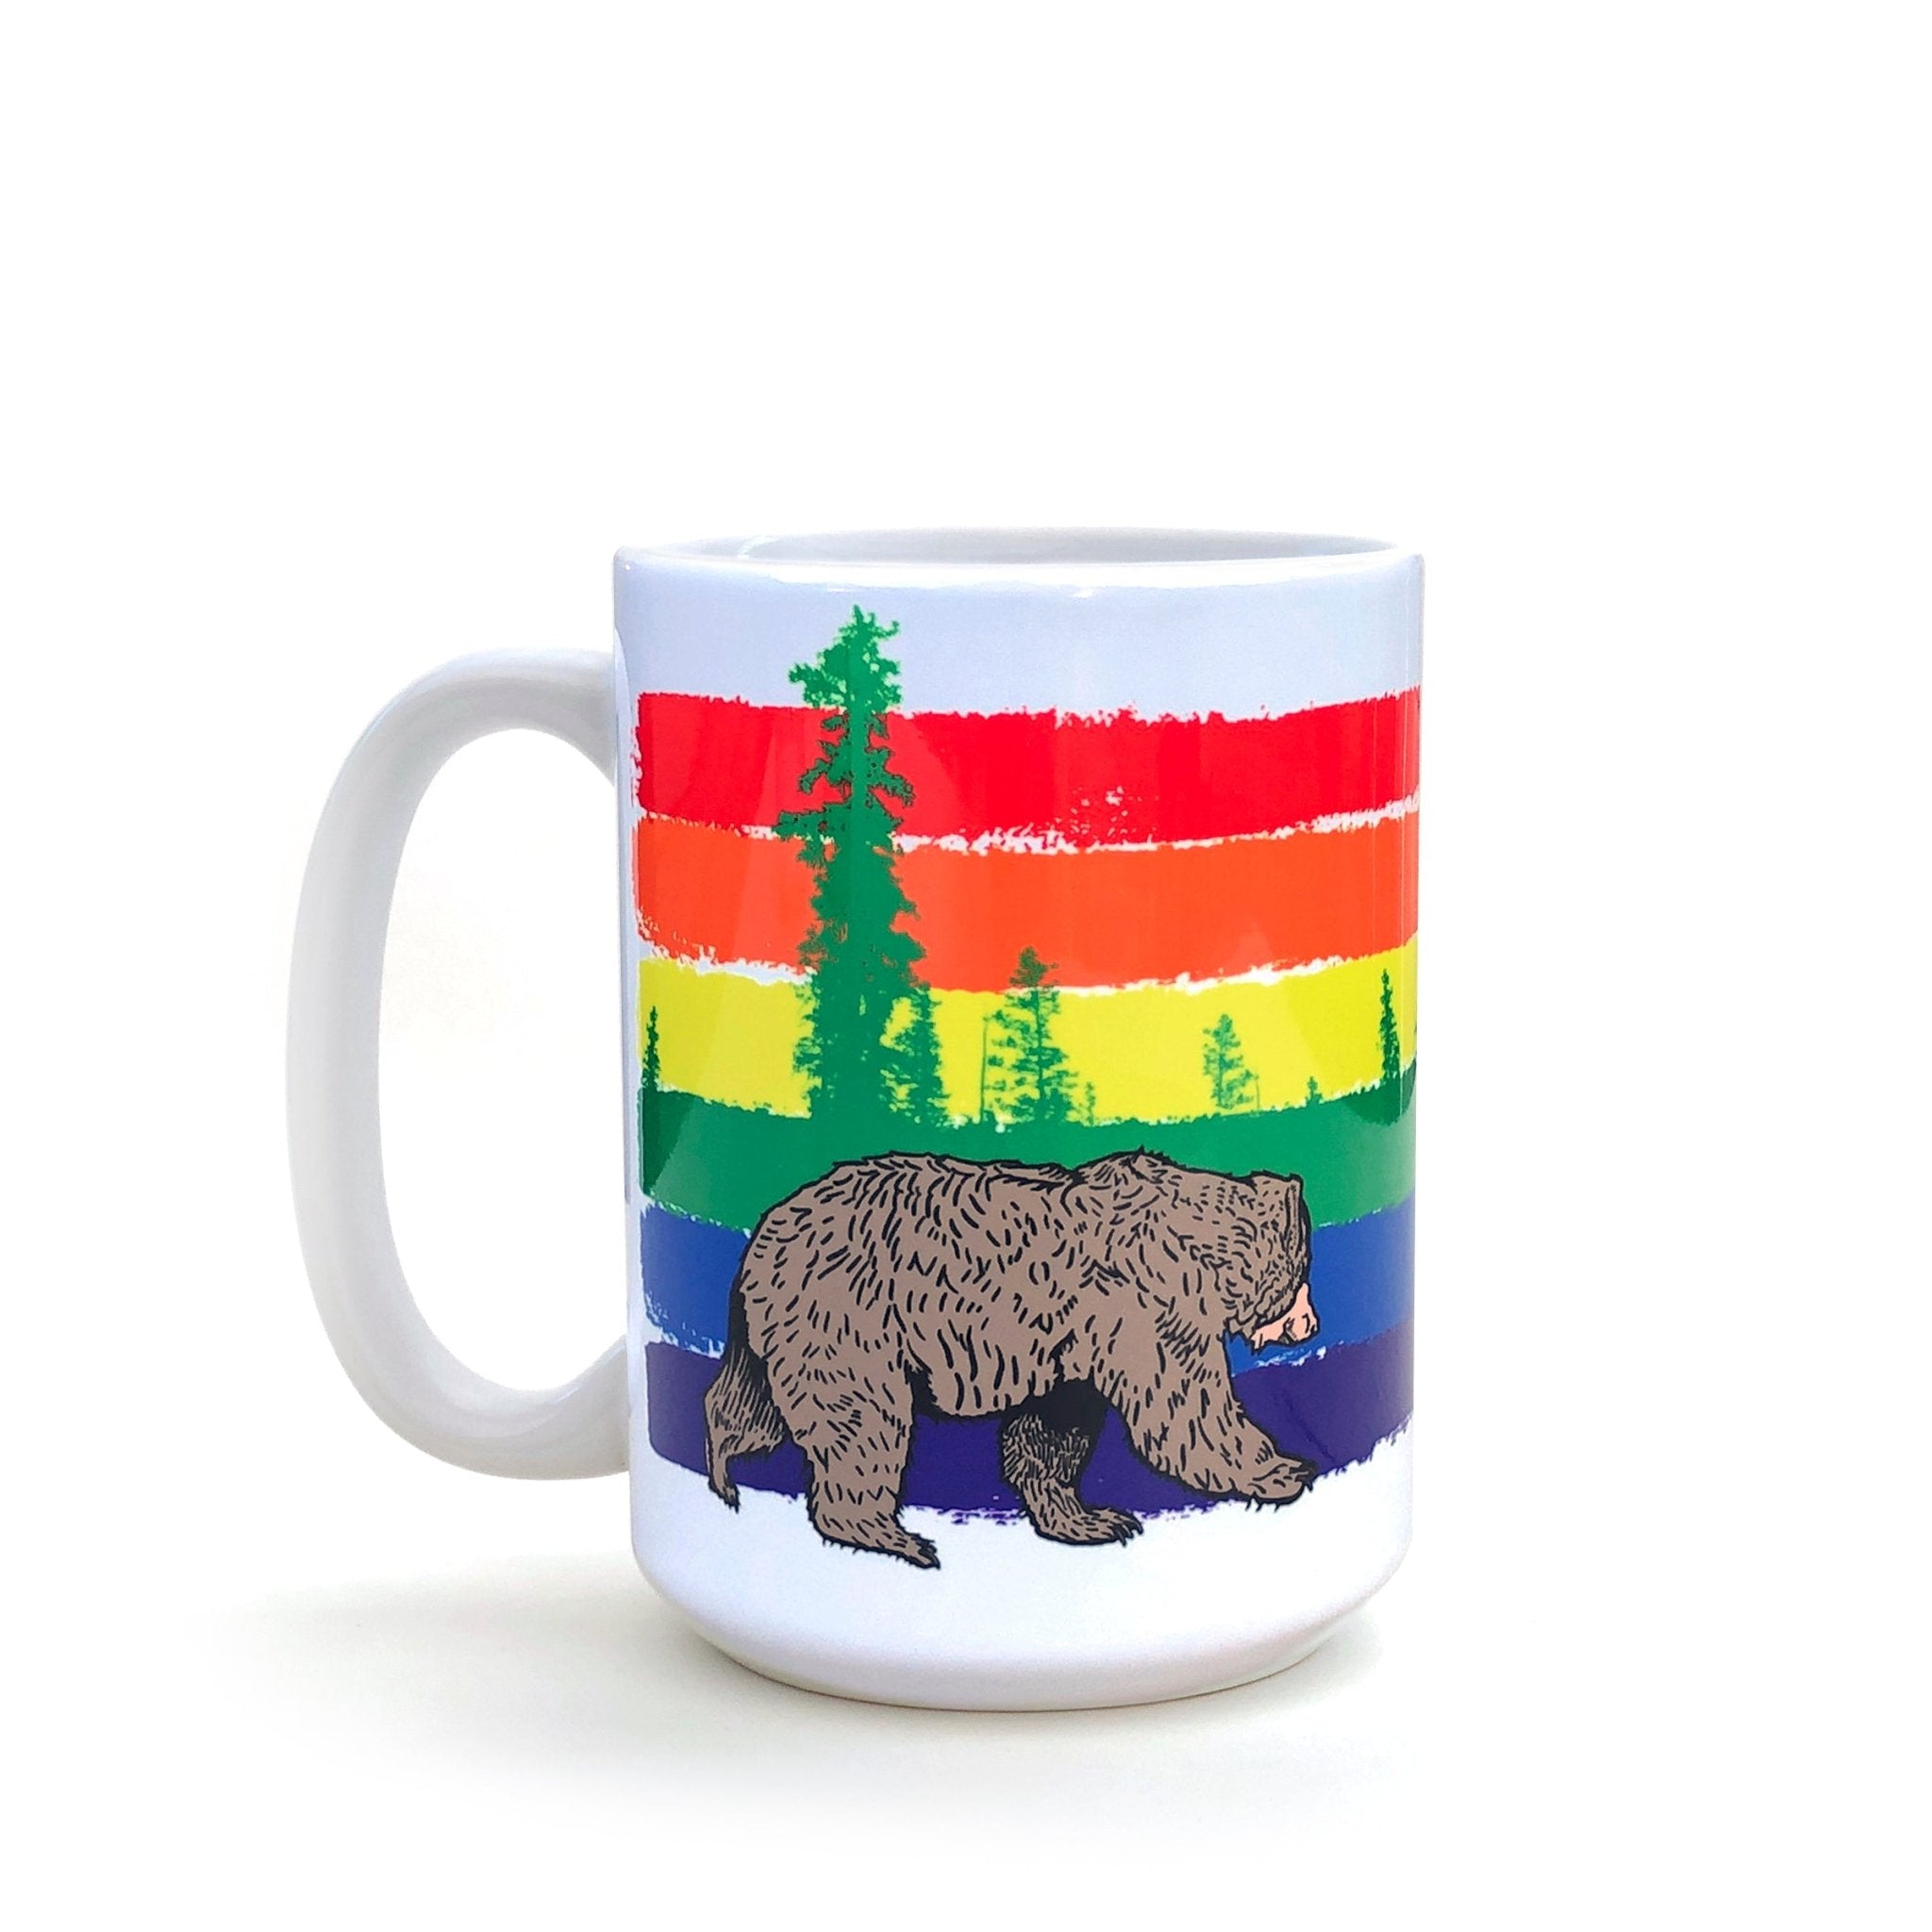 Rainbow Gay Pride Coffee Mug - Mug - Two Little Fruits - Two Little Fruits